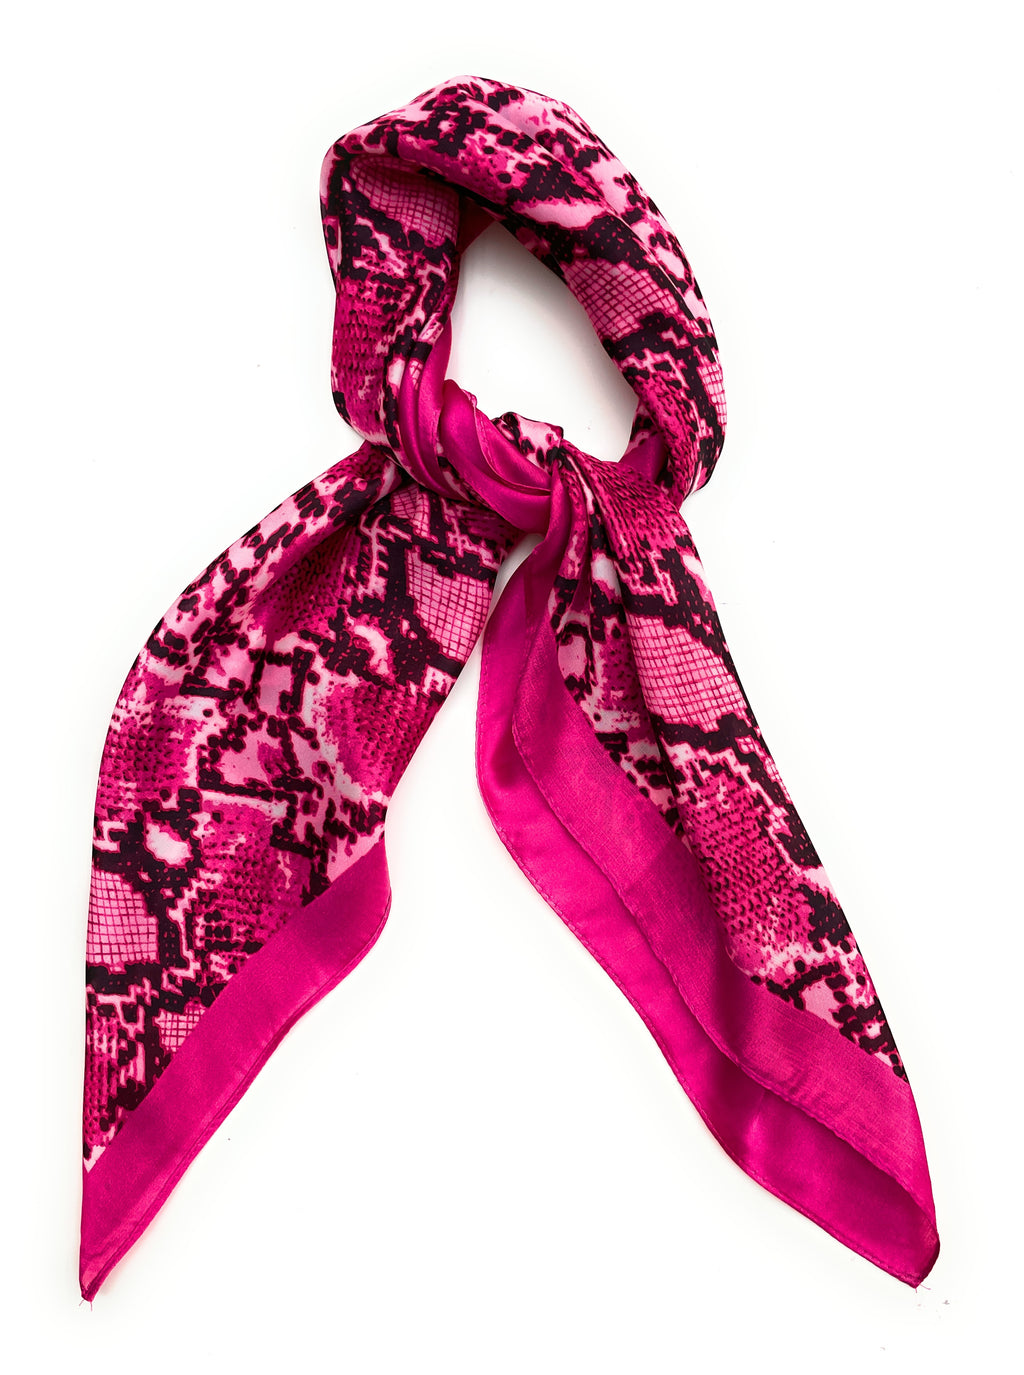 70cm x 70cm Square Scarf Fuchsia Hot Pink Neon Snake Print Pattern Scarf Thin Silky Womens Summer Spring